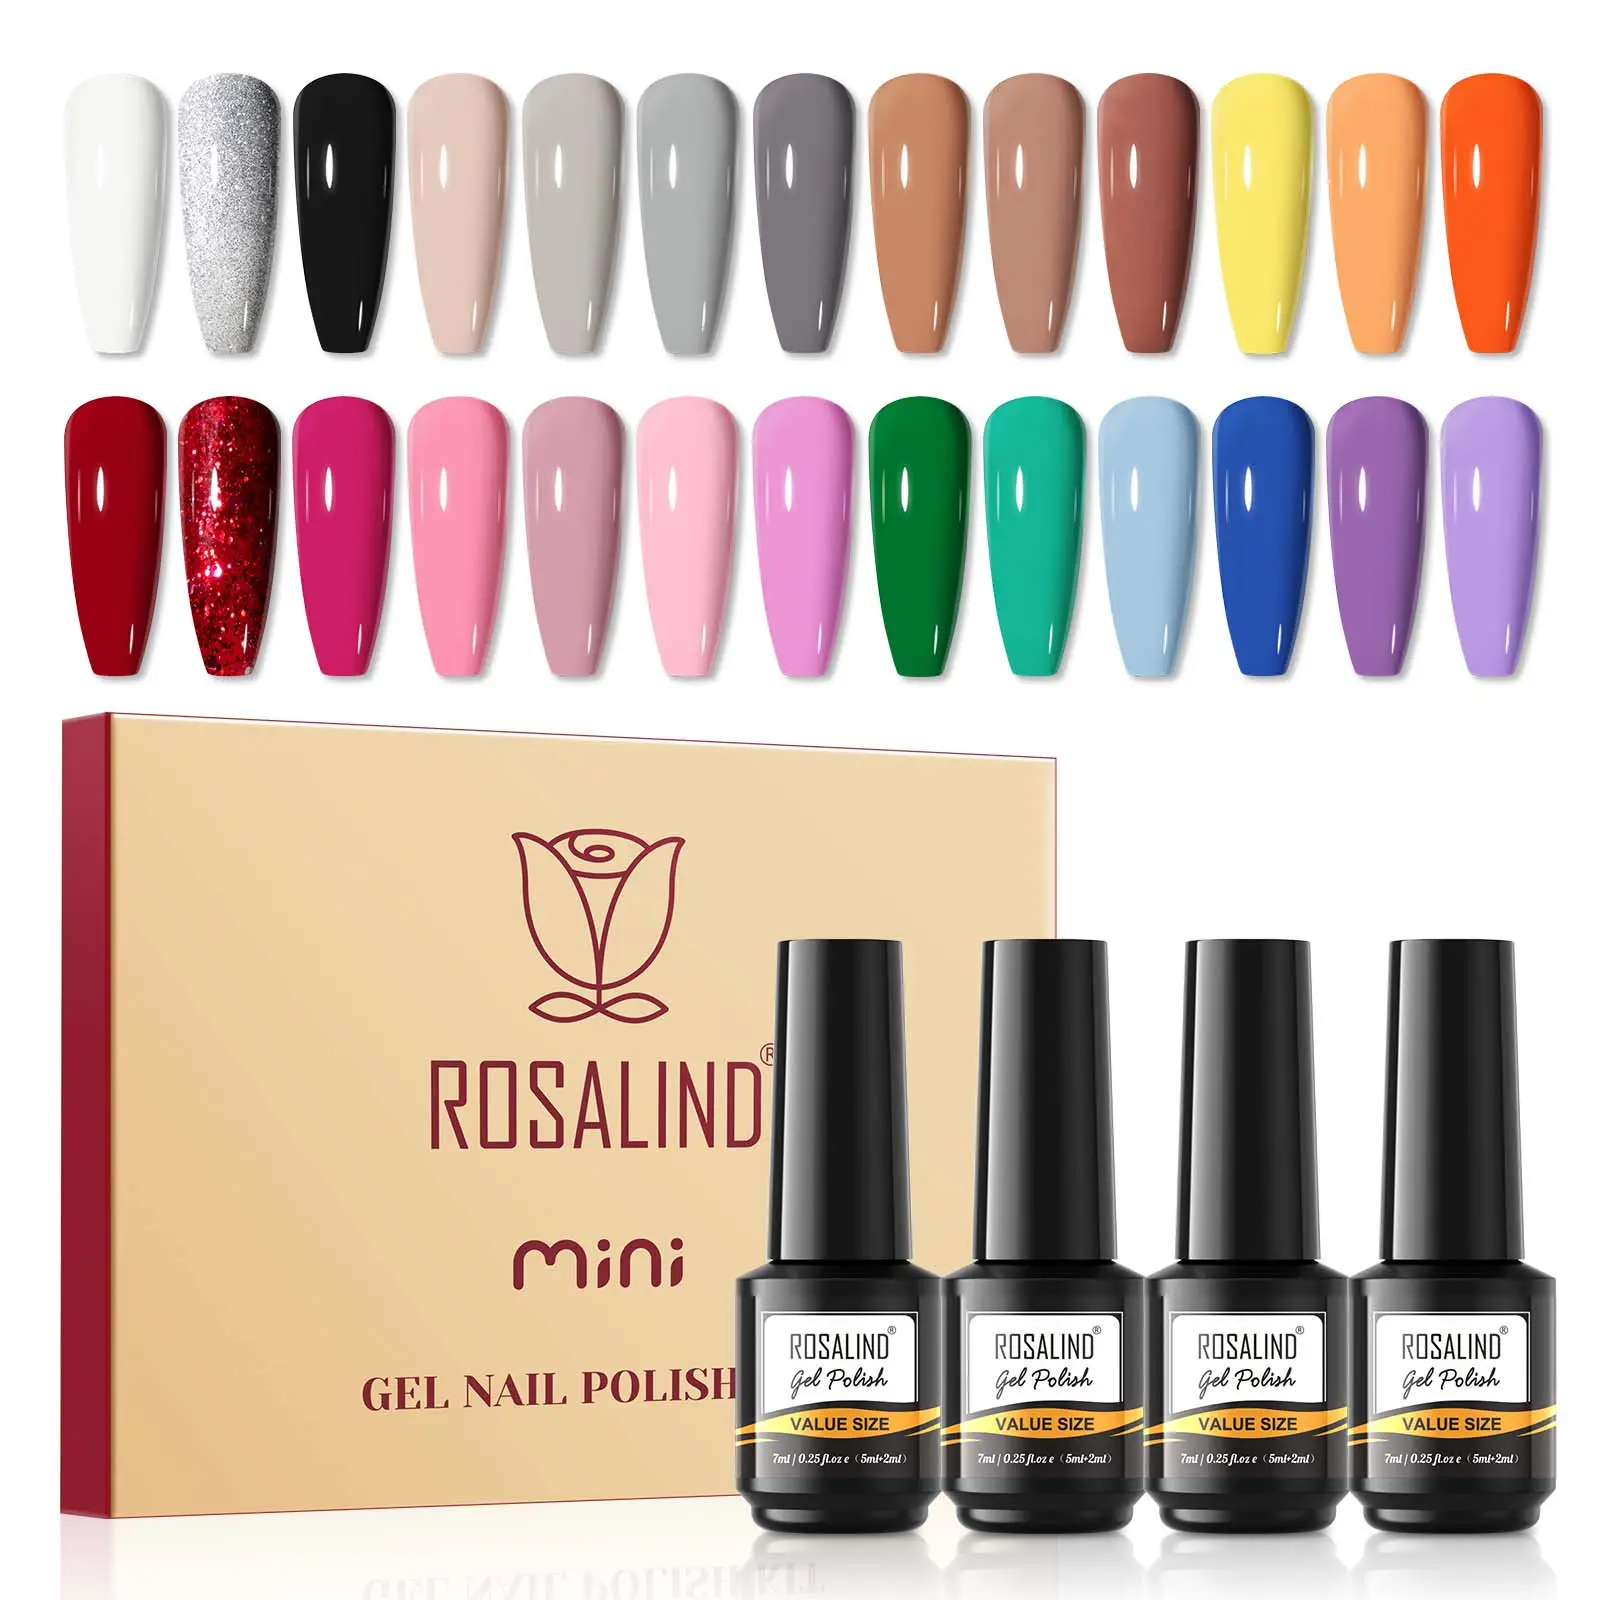 Rosalind vernis semi permanent nail supplier custom logo nude pastel esmalte en gel nail polish uv gel set for nail art design